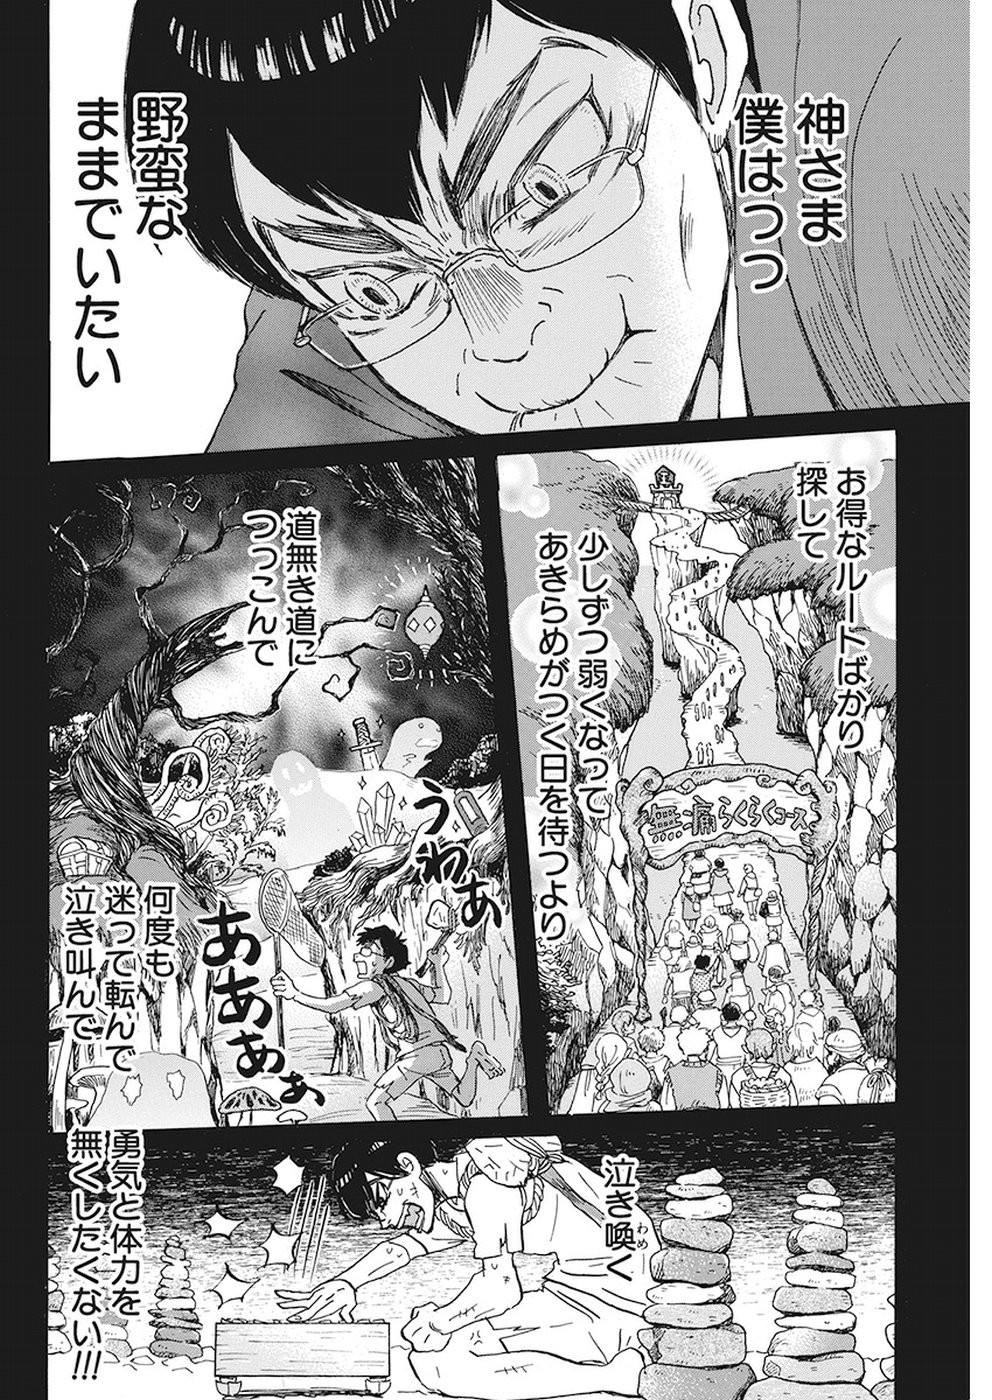 3 Gatsu no Lion - Chapter 159 - Page 4